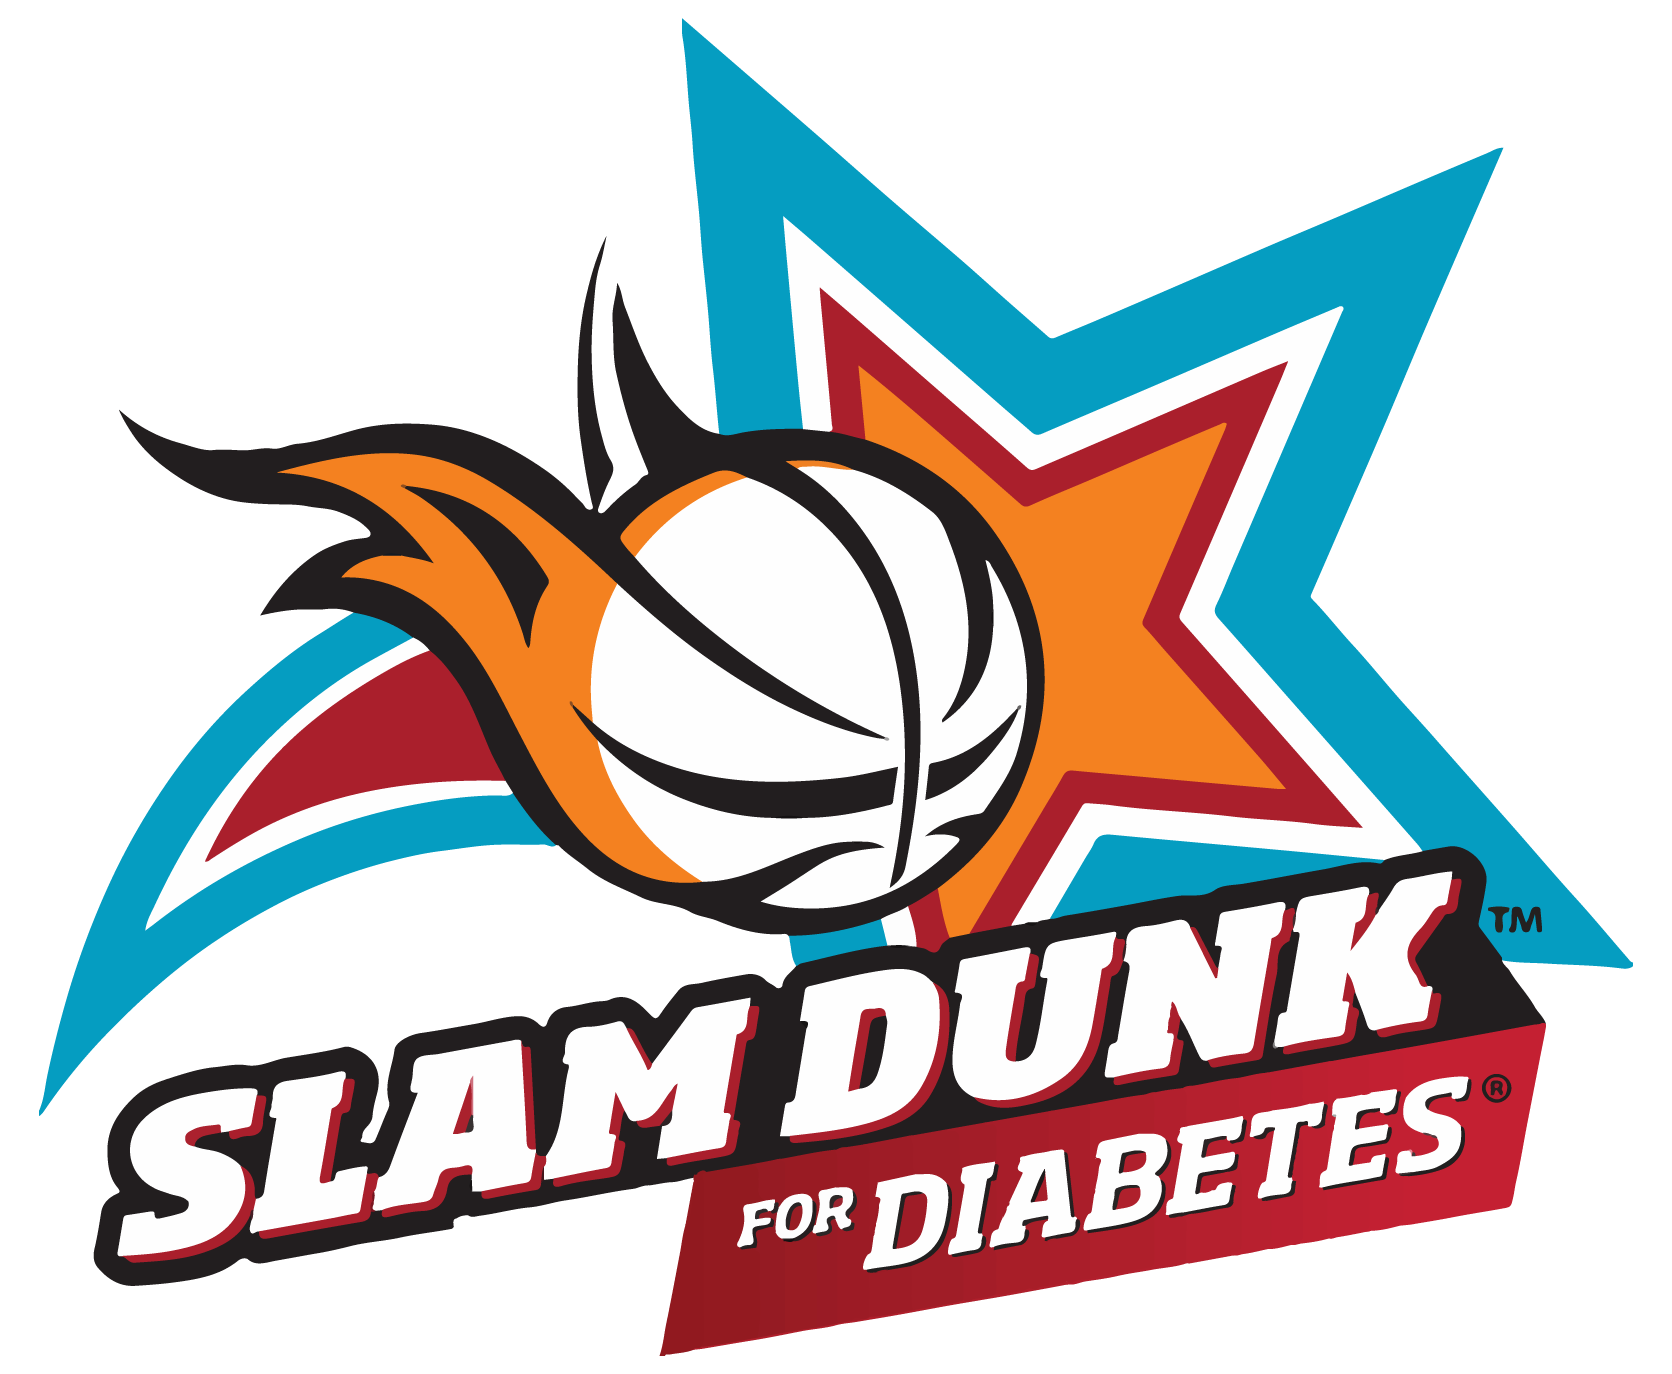 Slam Dunk For Diabetes